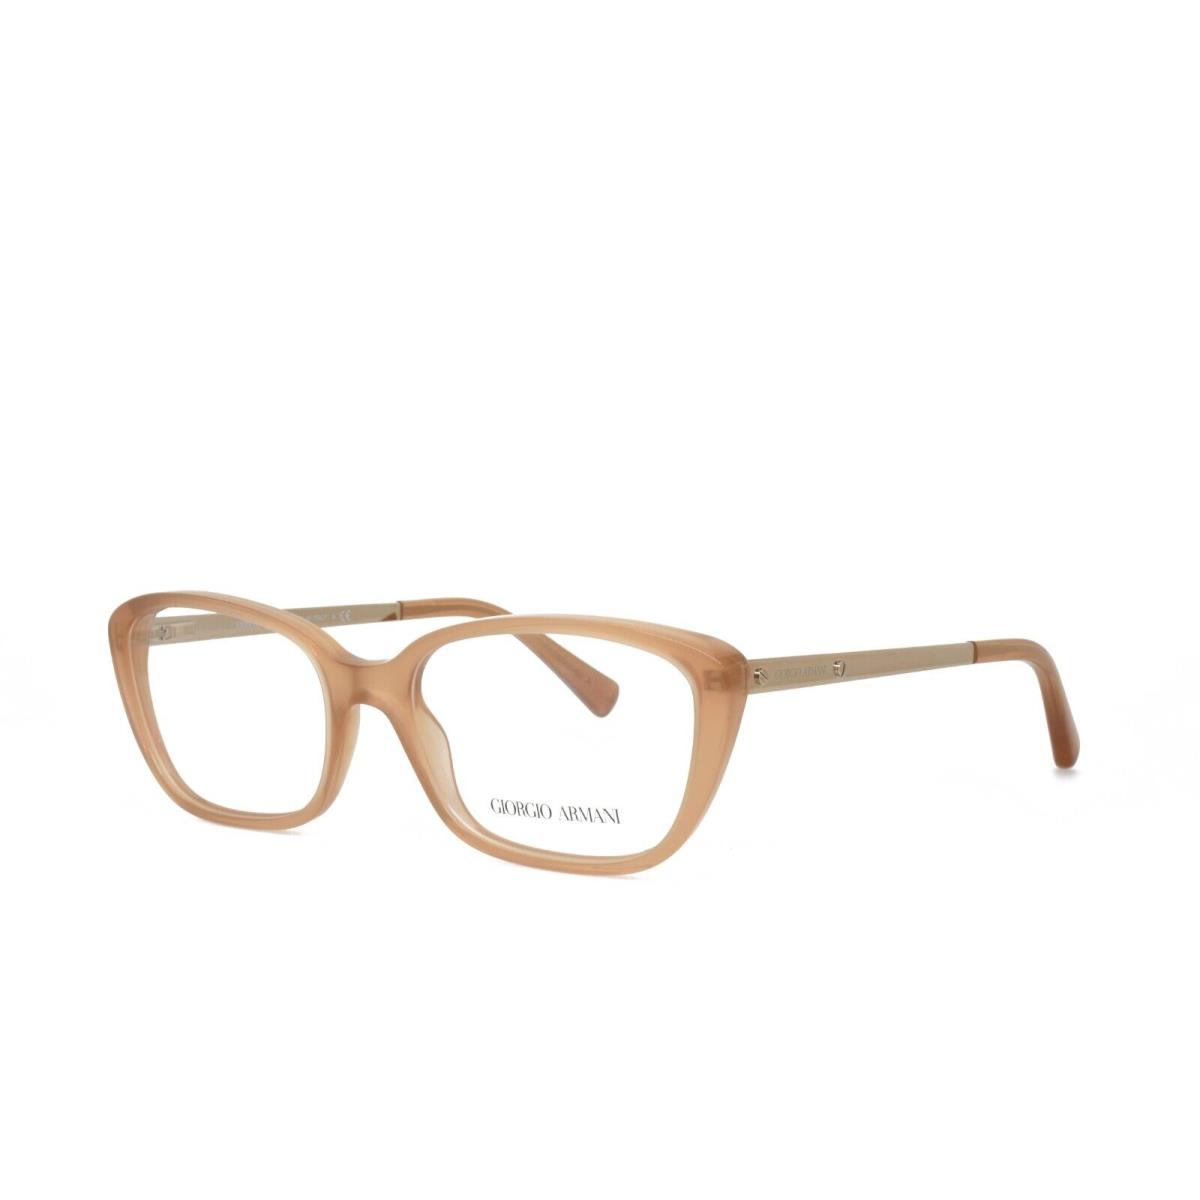 Giorgio Armani 7012 5043 52-17-140 Light Brown Eyeglasses Frames